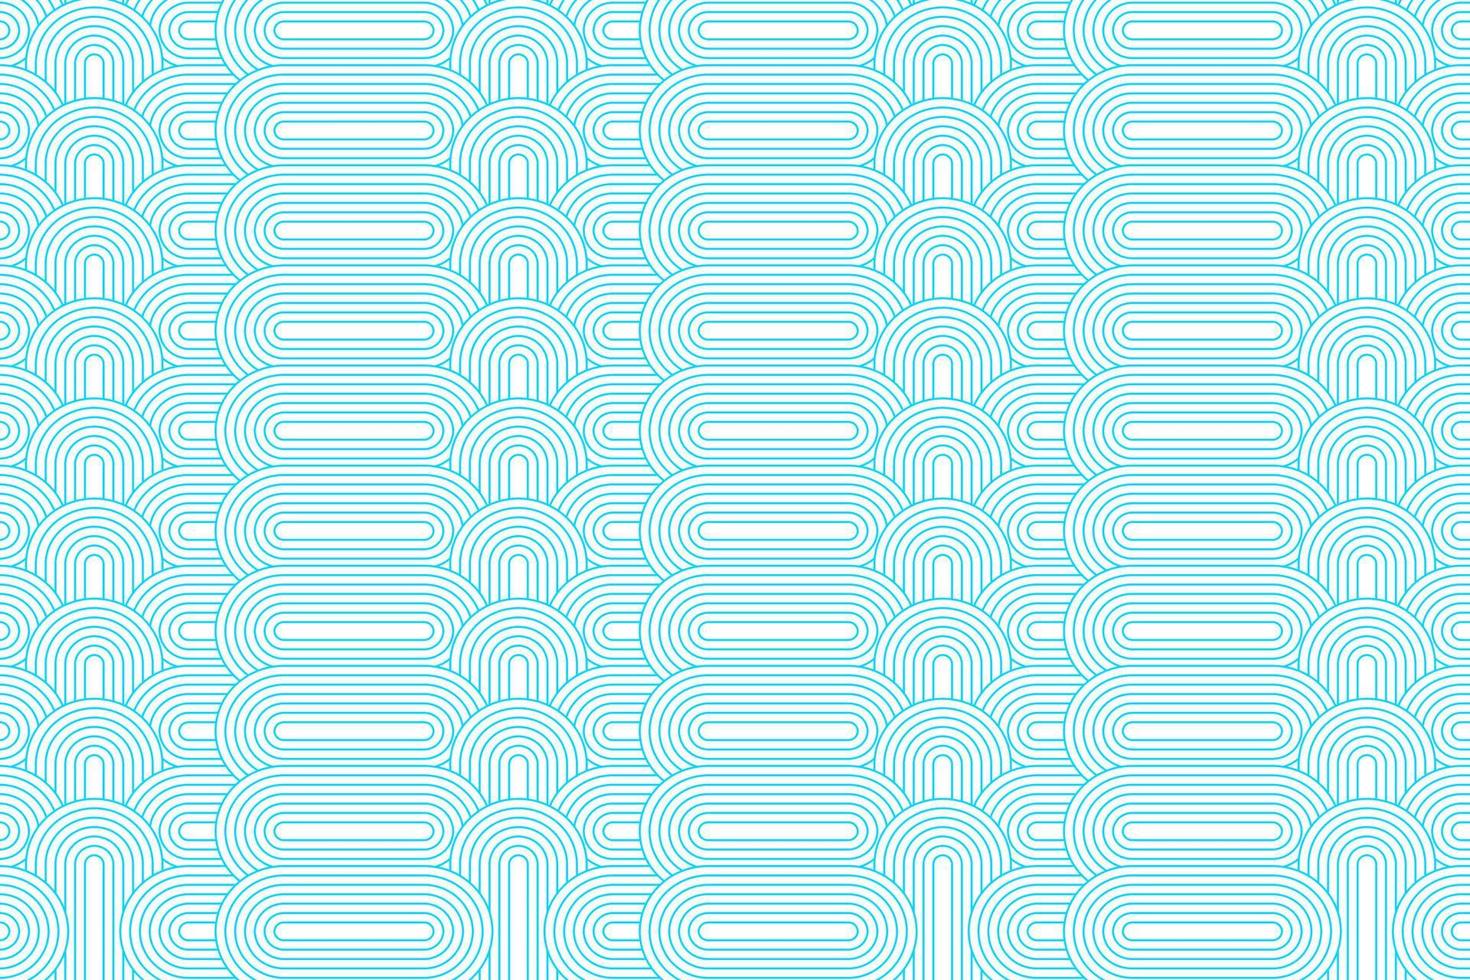 sömlös geometrisk linje cirkel mönster design. textil- blommig mönster bakgrund. abstrakt geometrisk hexagonal 3d kuber mönster. vektor